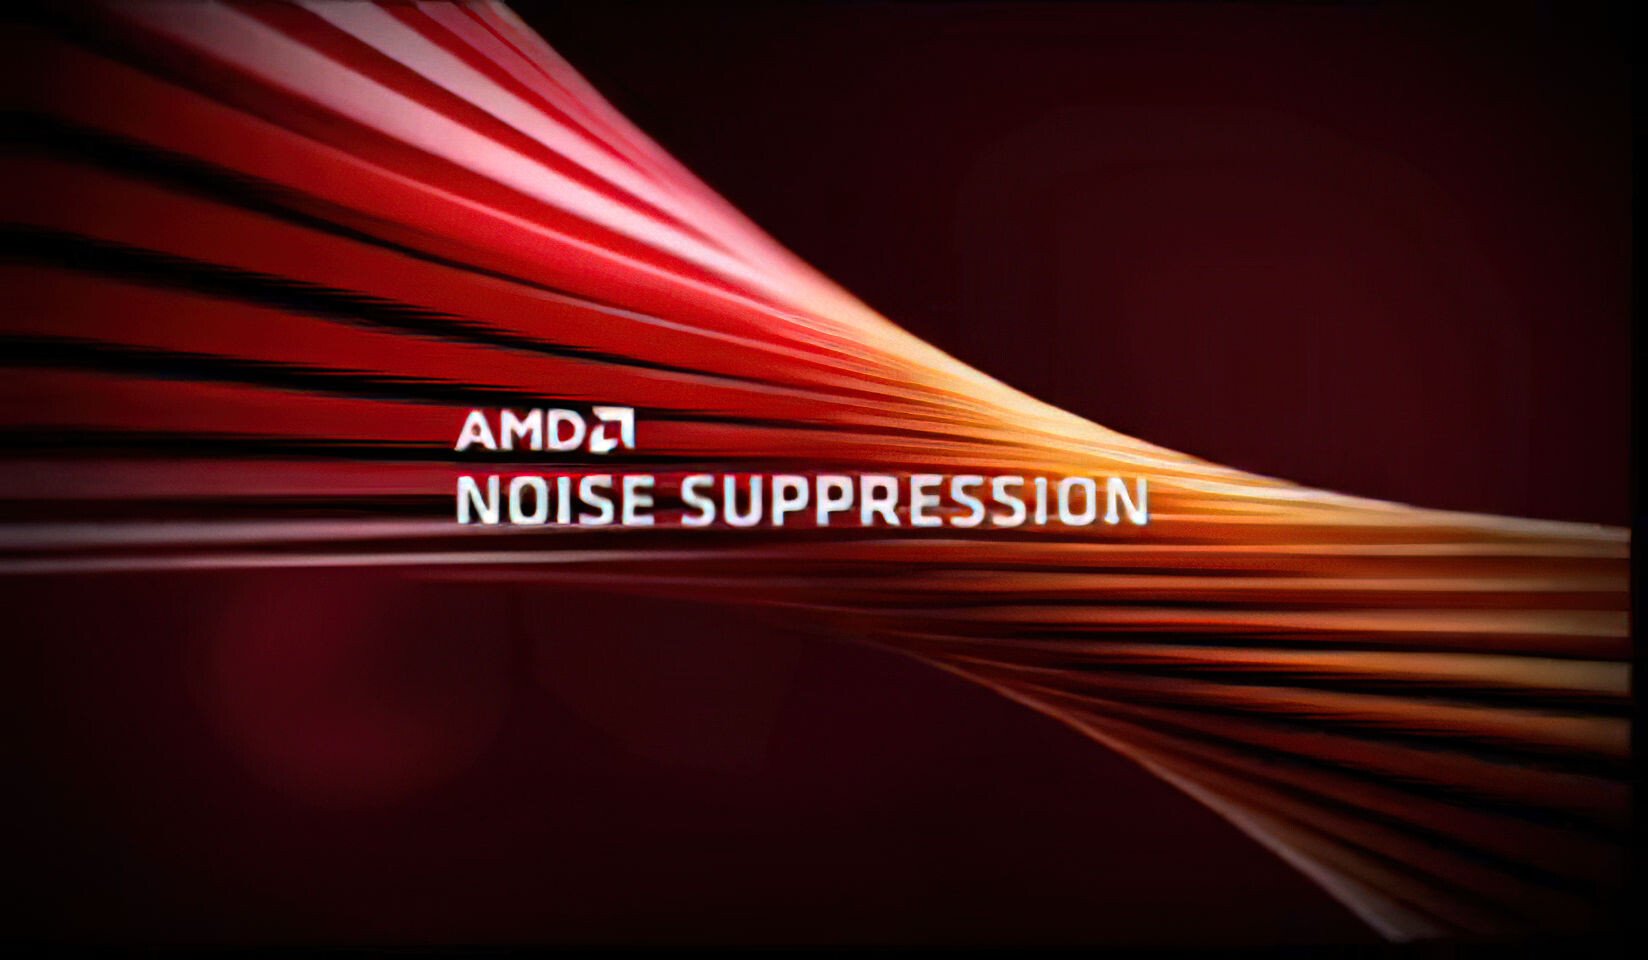 AMDnin-Gurultu-Azaltma-Teknolojisi-Hazir-Noise-Suppression.jpg